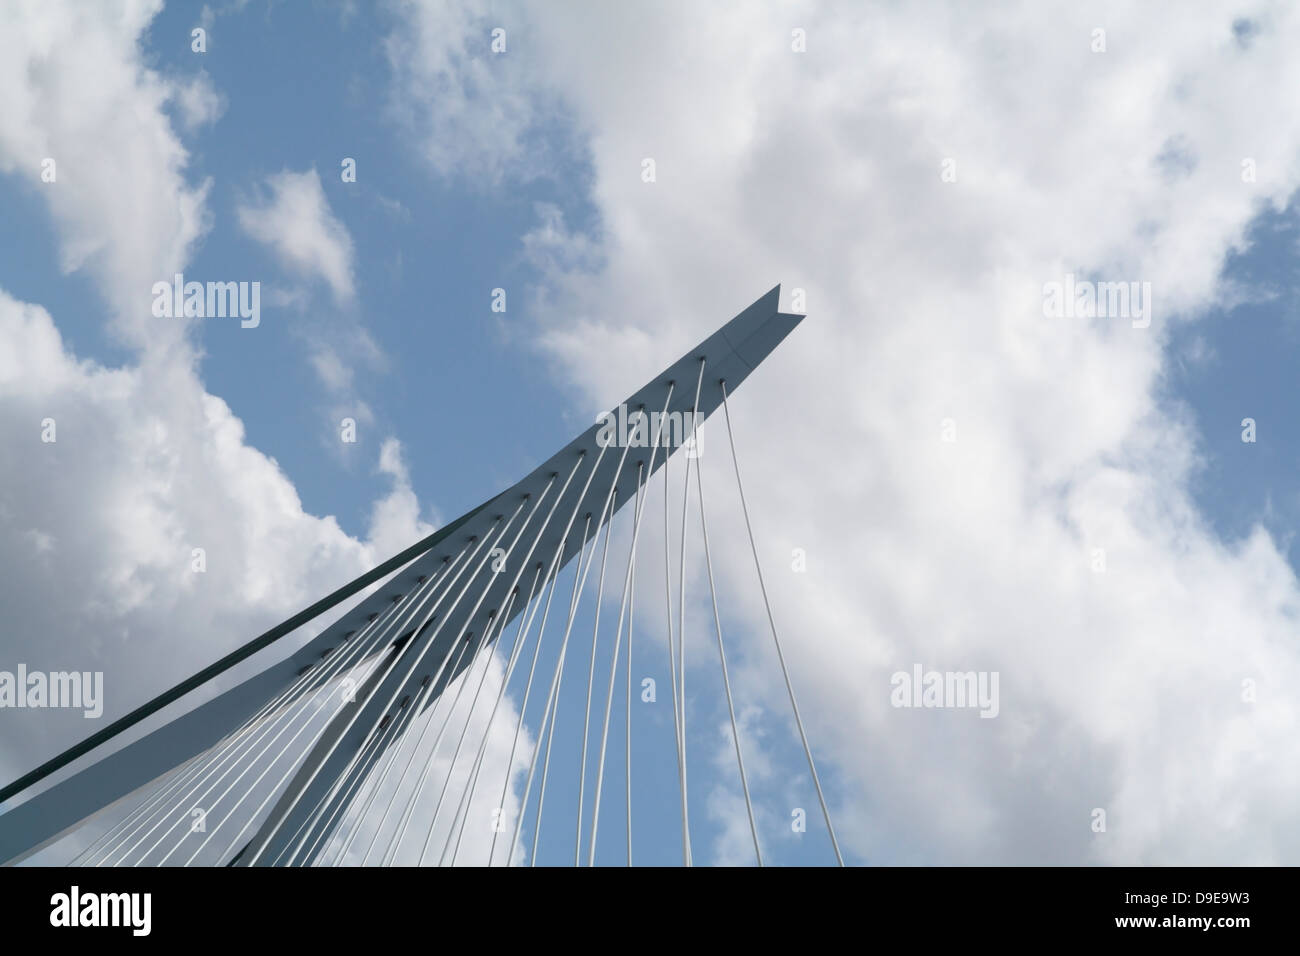 Dettaglio del Ponte Erasmus di Rotterdam, Paesi Bassi Foto Stock